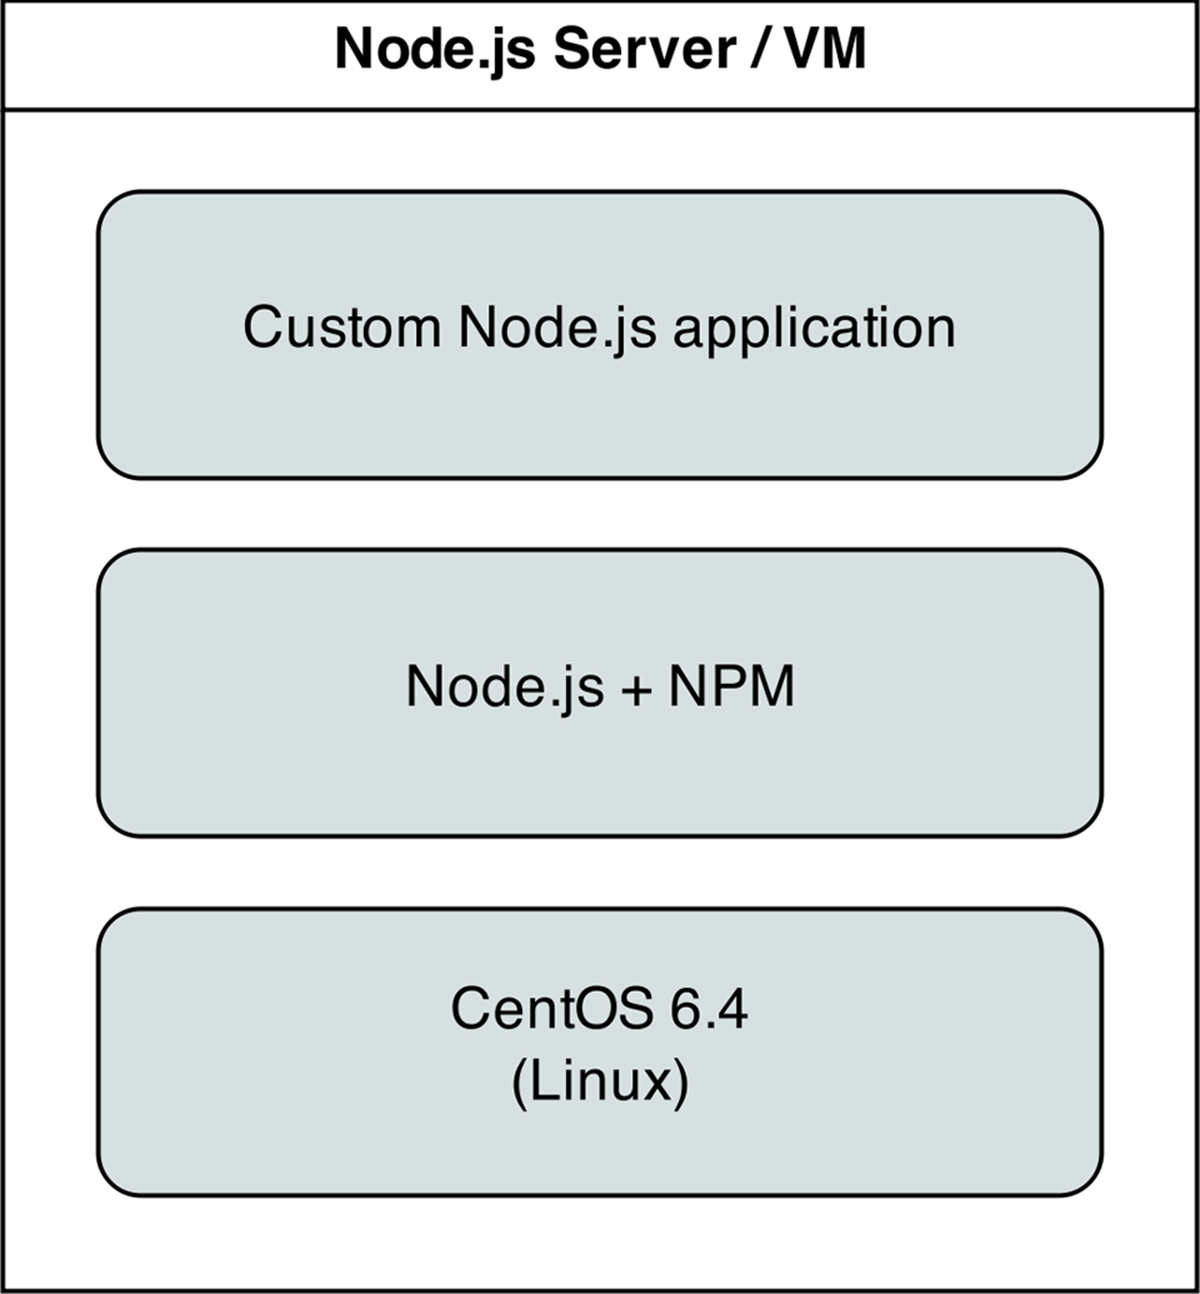 Node.js app on CentOS